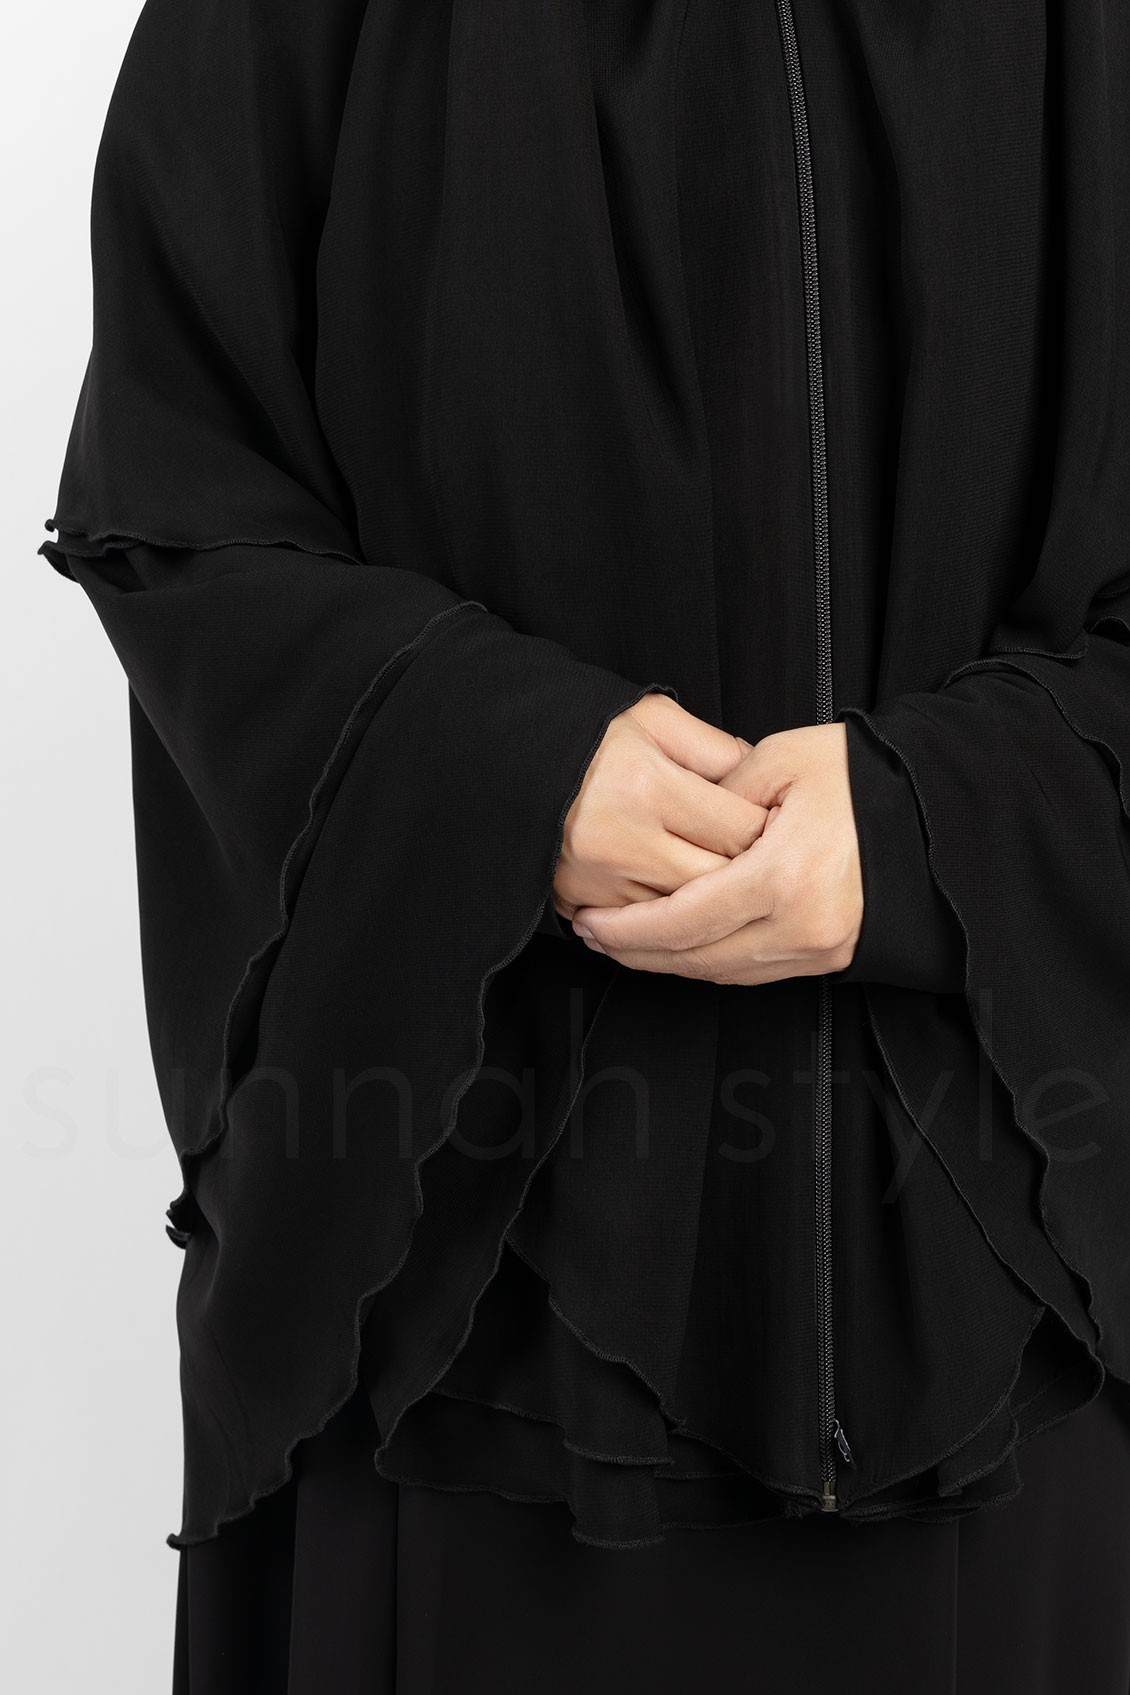 Sunnah Style 4-Layer Yemeni Khimar Hajj Umrah Niqab Black